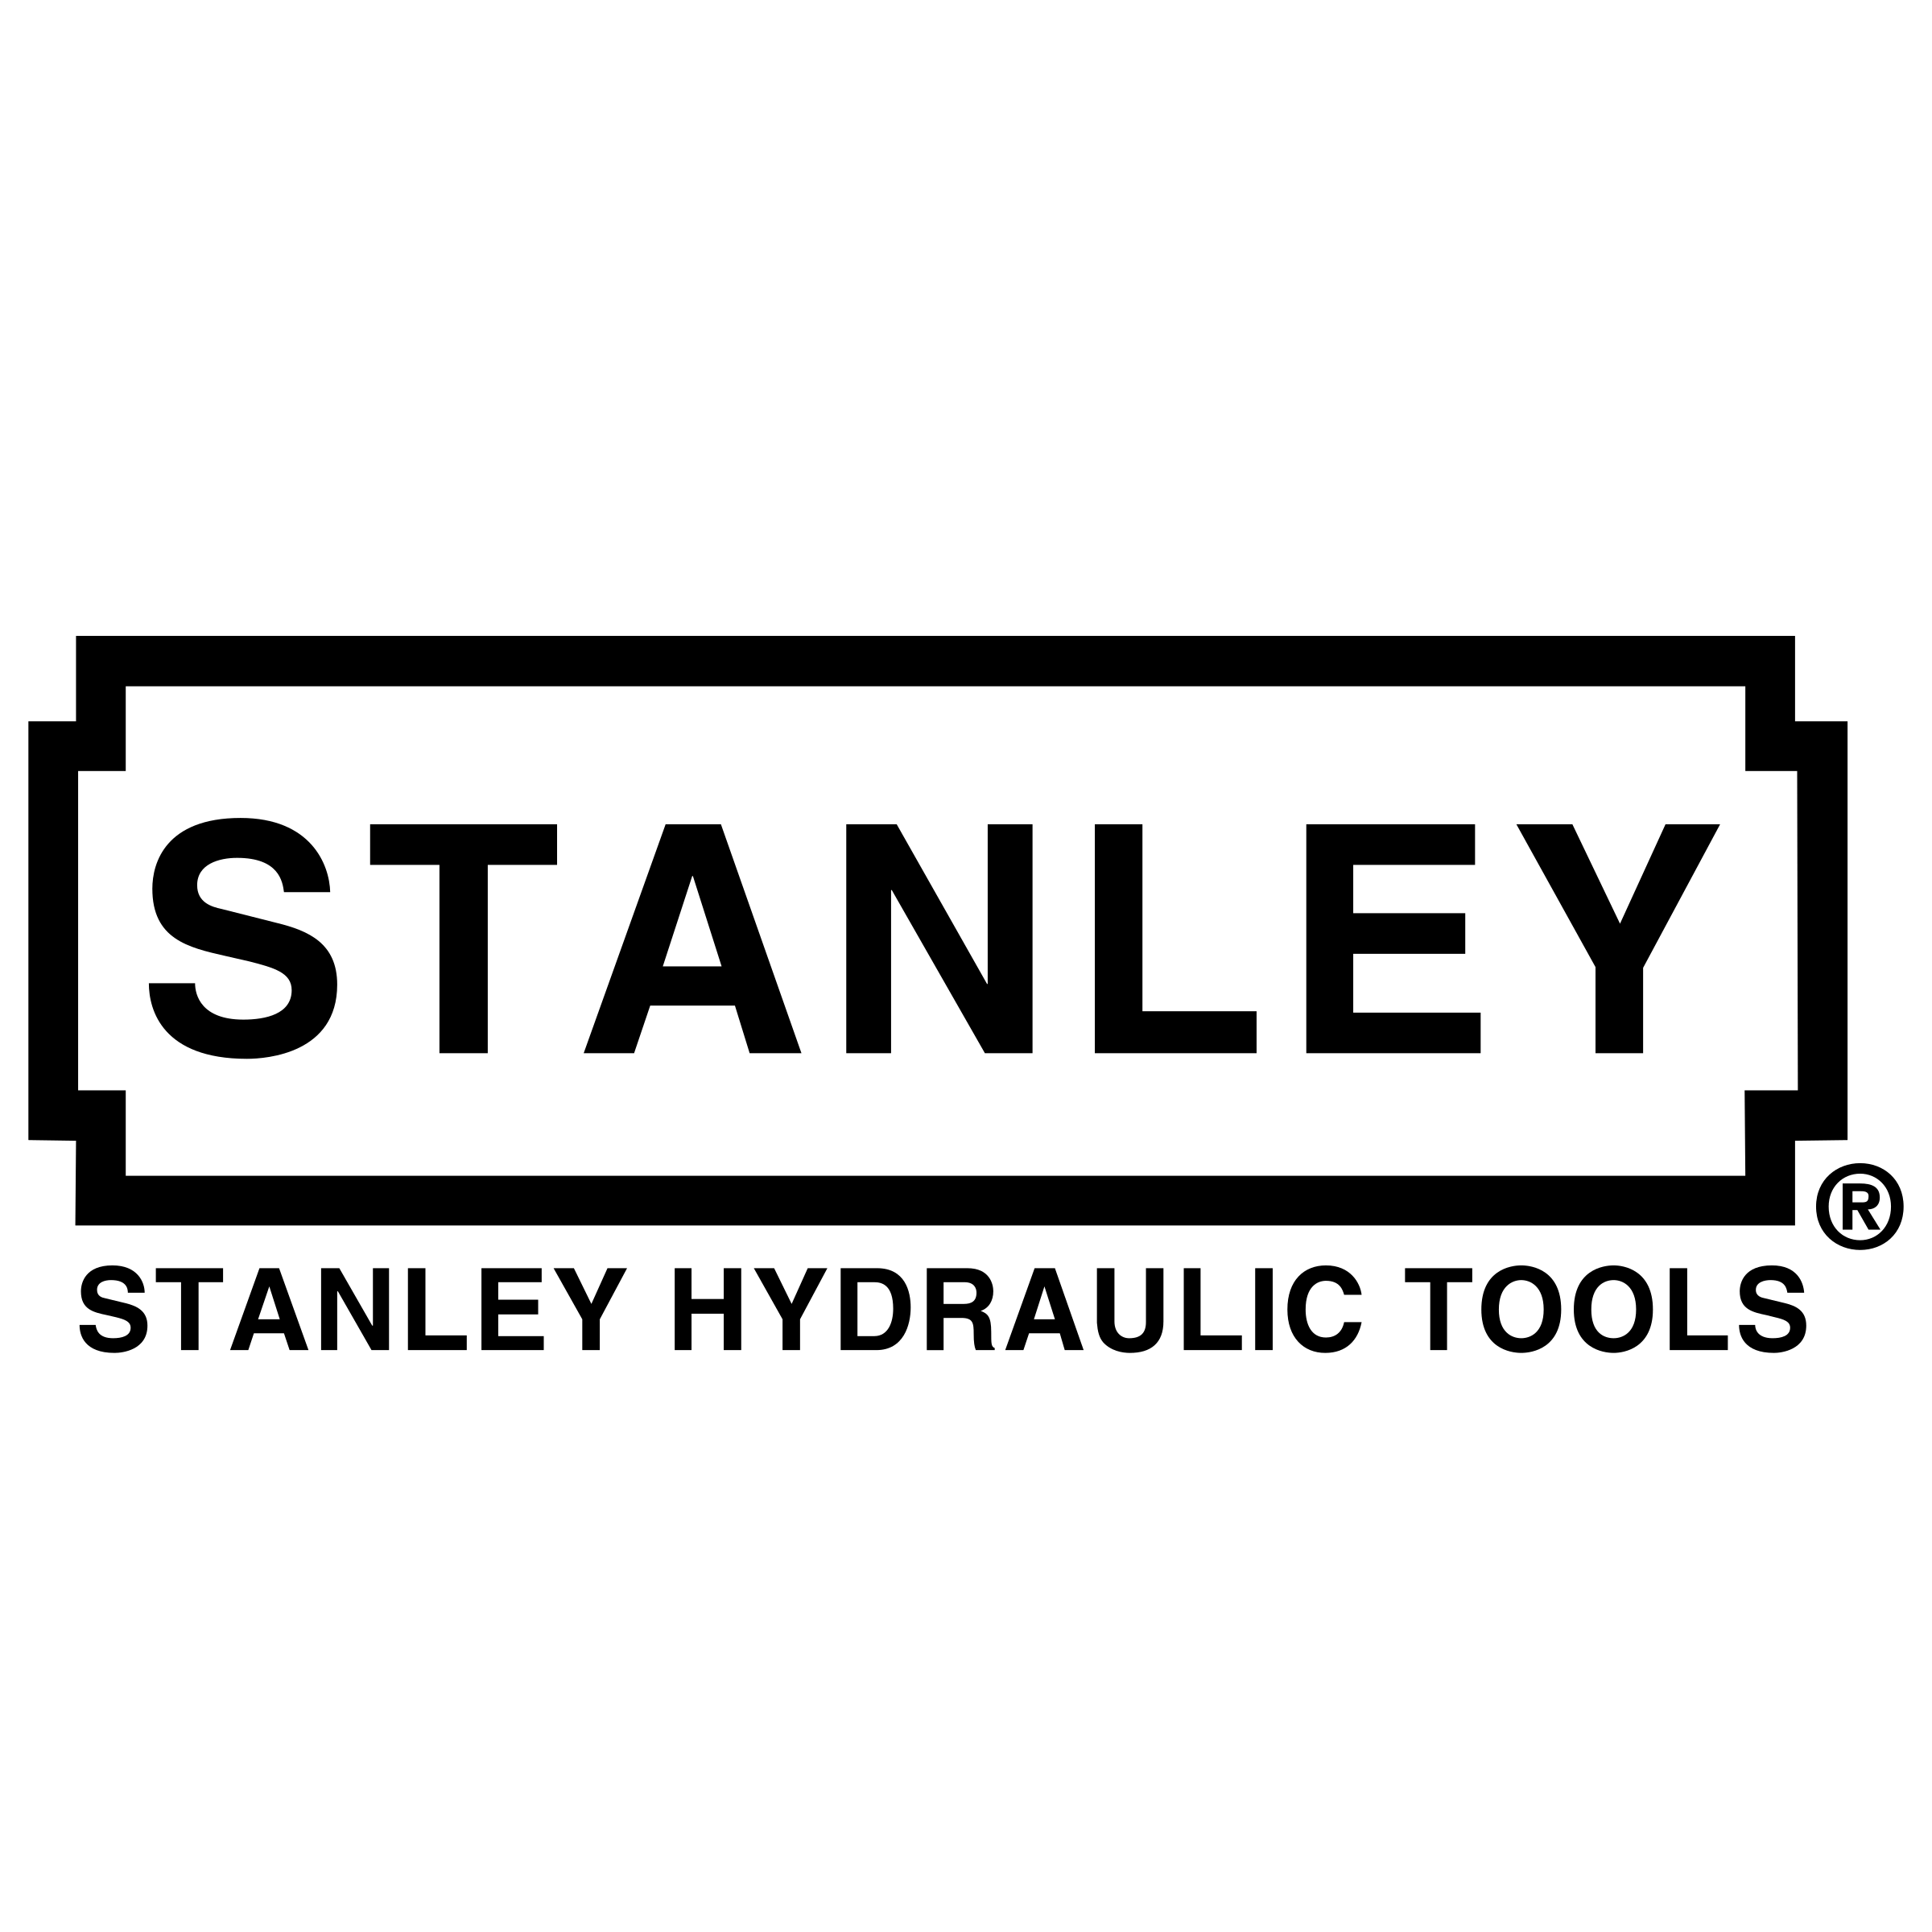 Stanley Logo - Stanley Logo PNG Transparent & SVG Vector - Freebie Supply